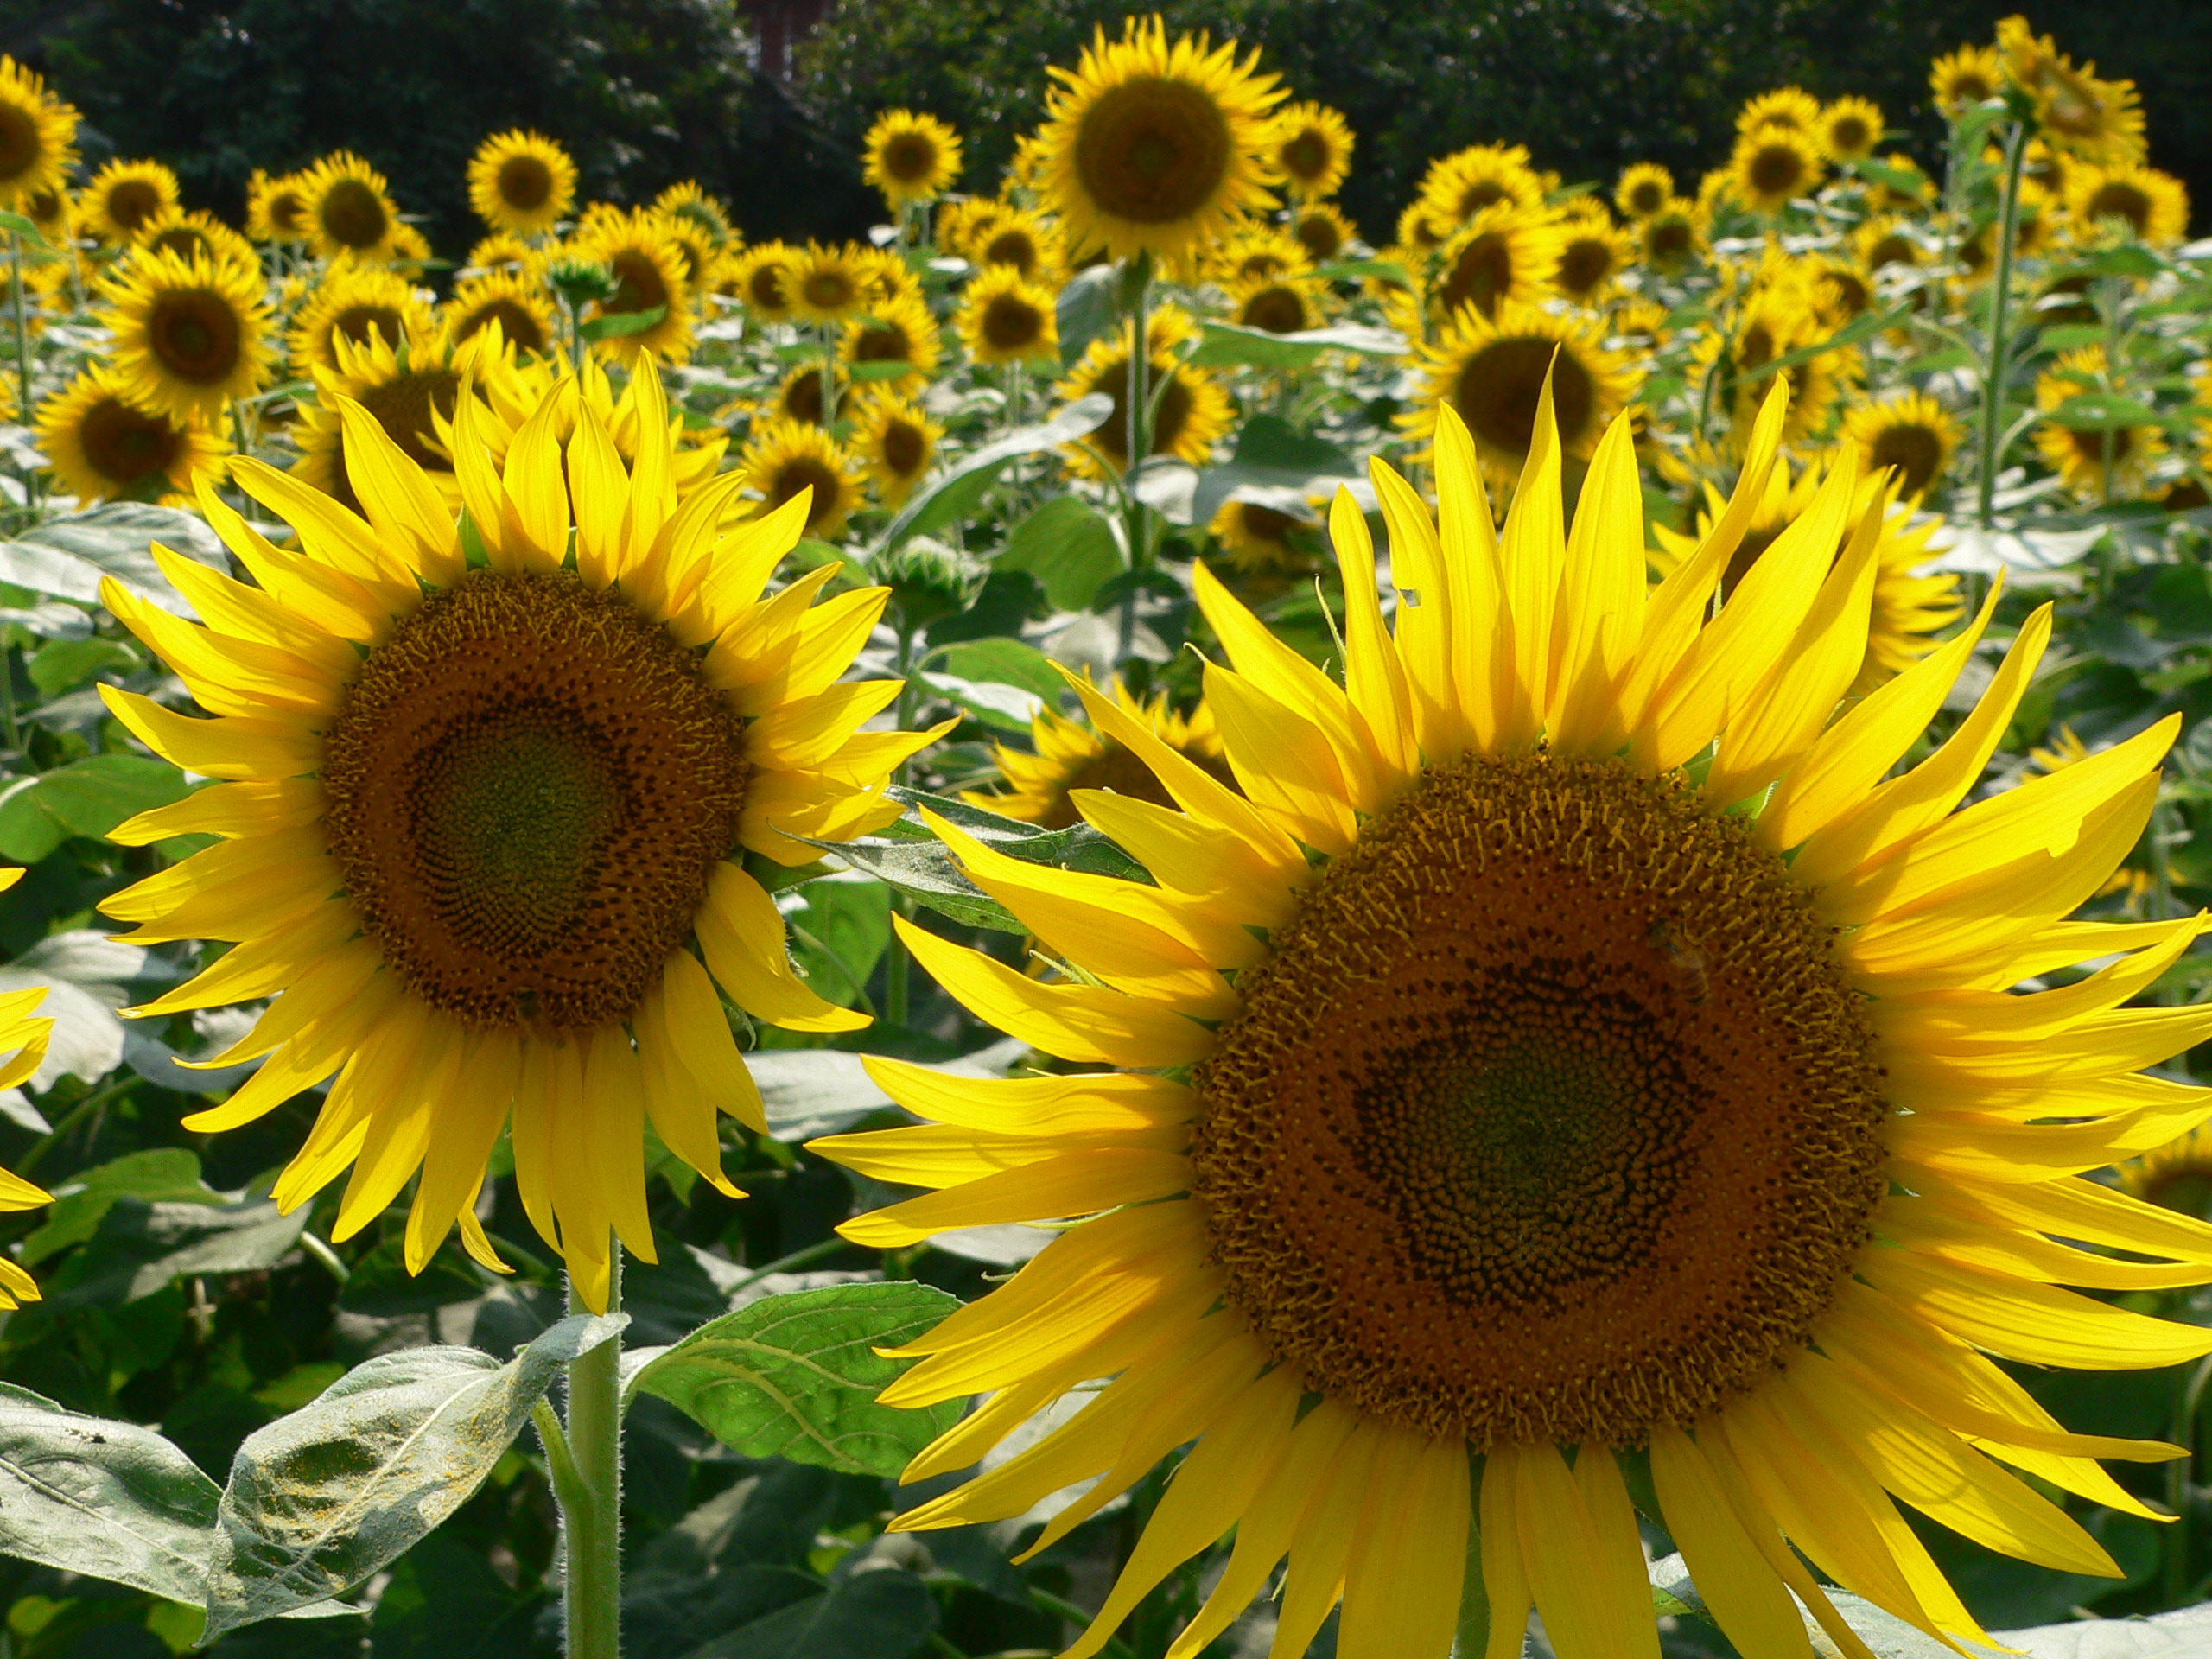 Field of sunflowers in hikawa, japan photo